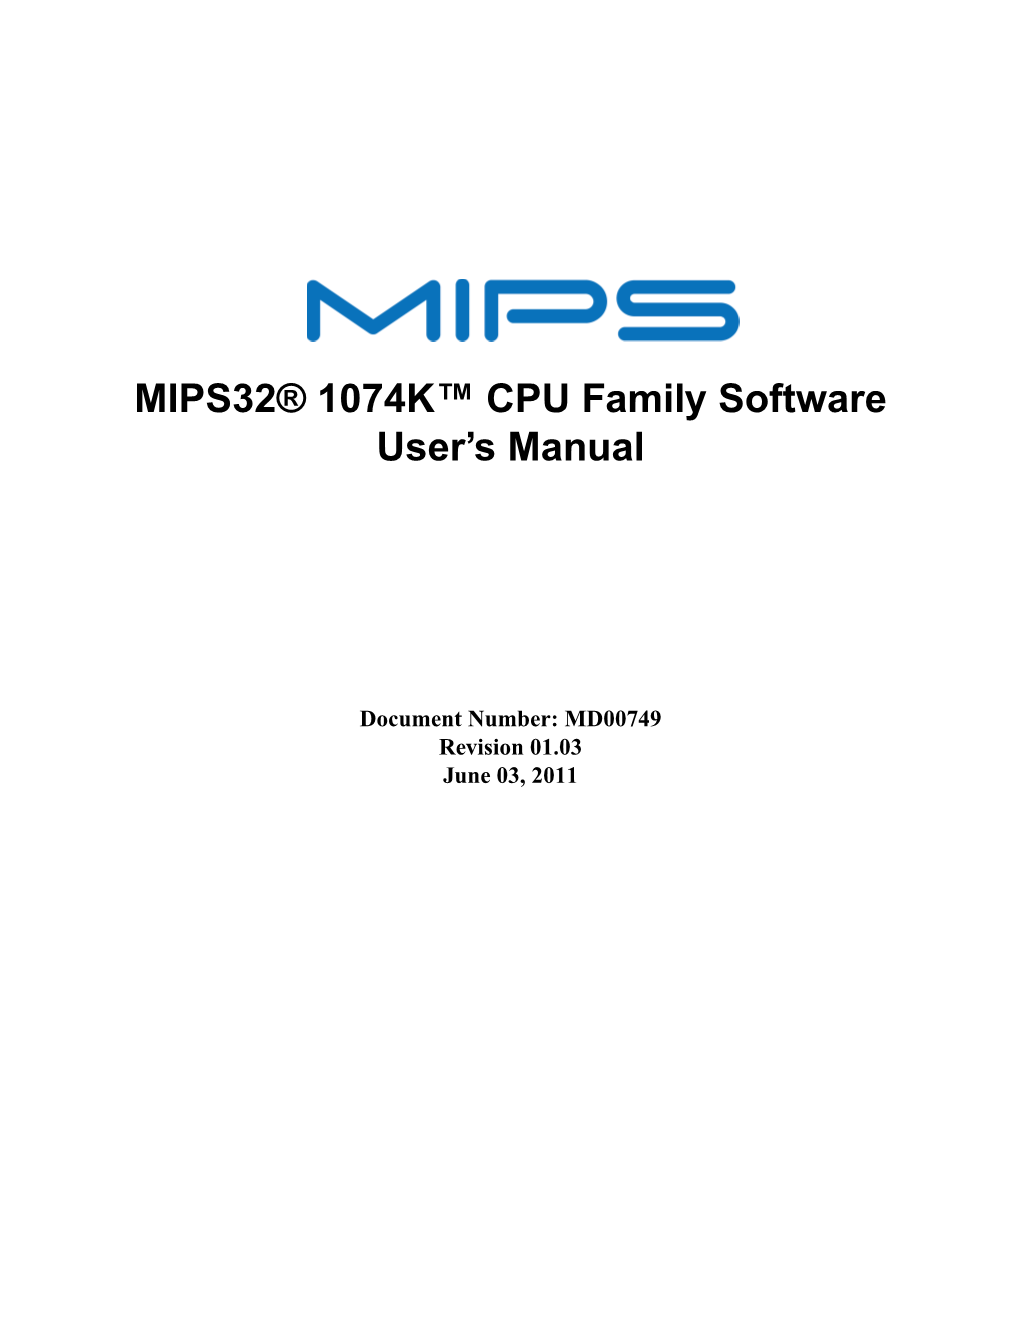 MIPS32® 1074K™ CPU Family Software User's Manual